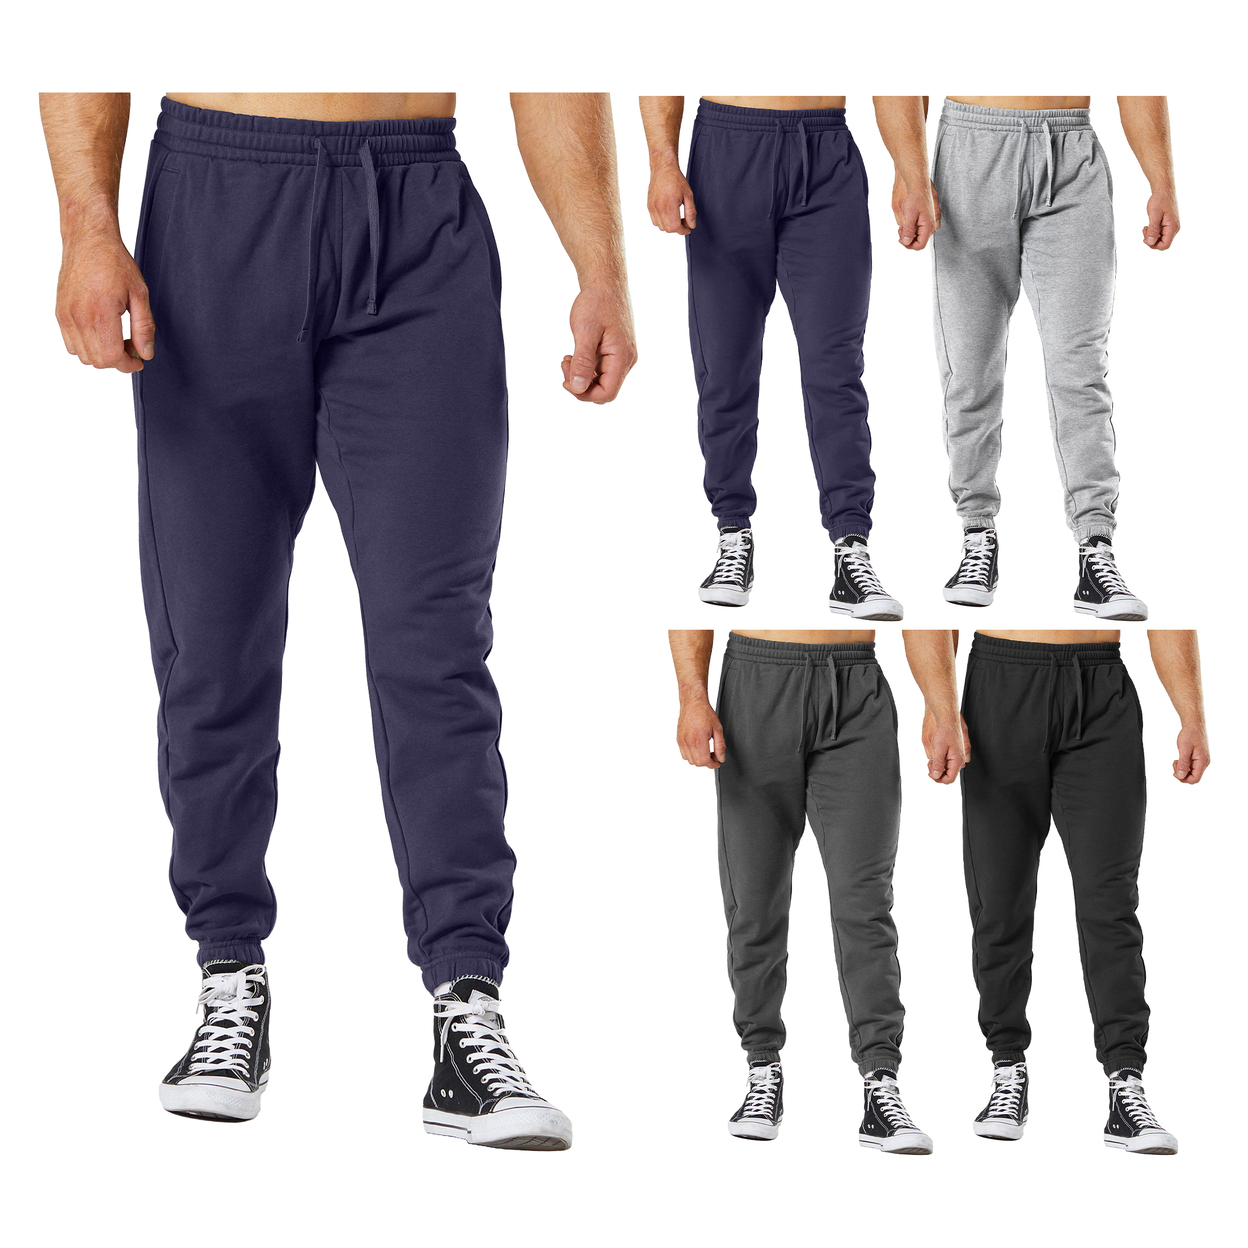 Men's Ultra-Soft Cozy Winter Warm Casual Fleece Lined Sweatpants Jogger - Grey, Large